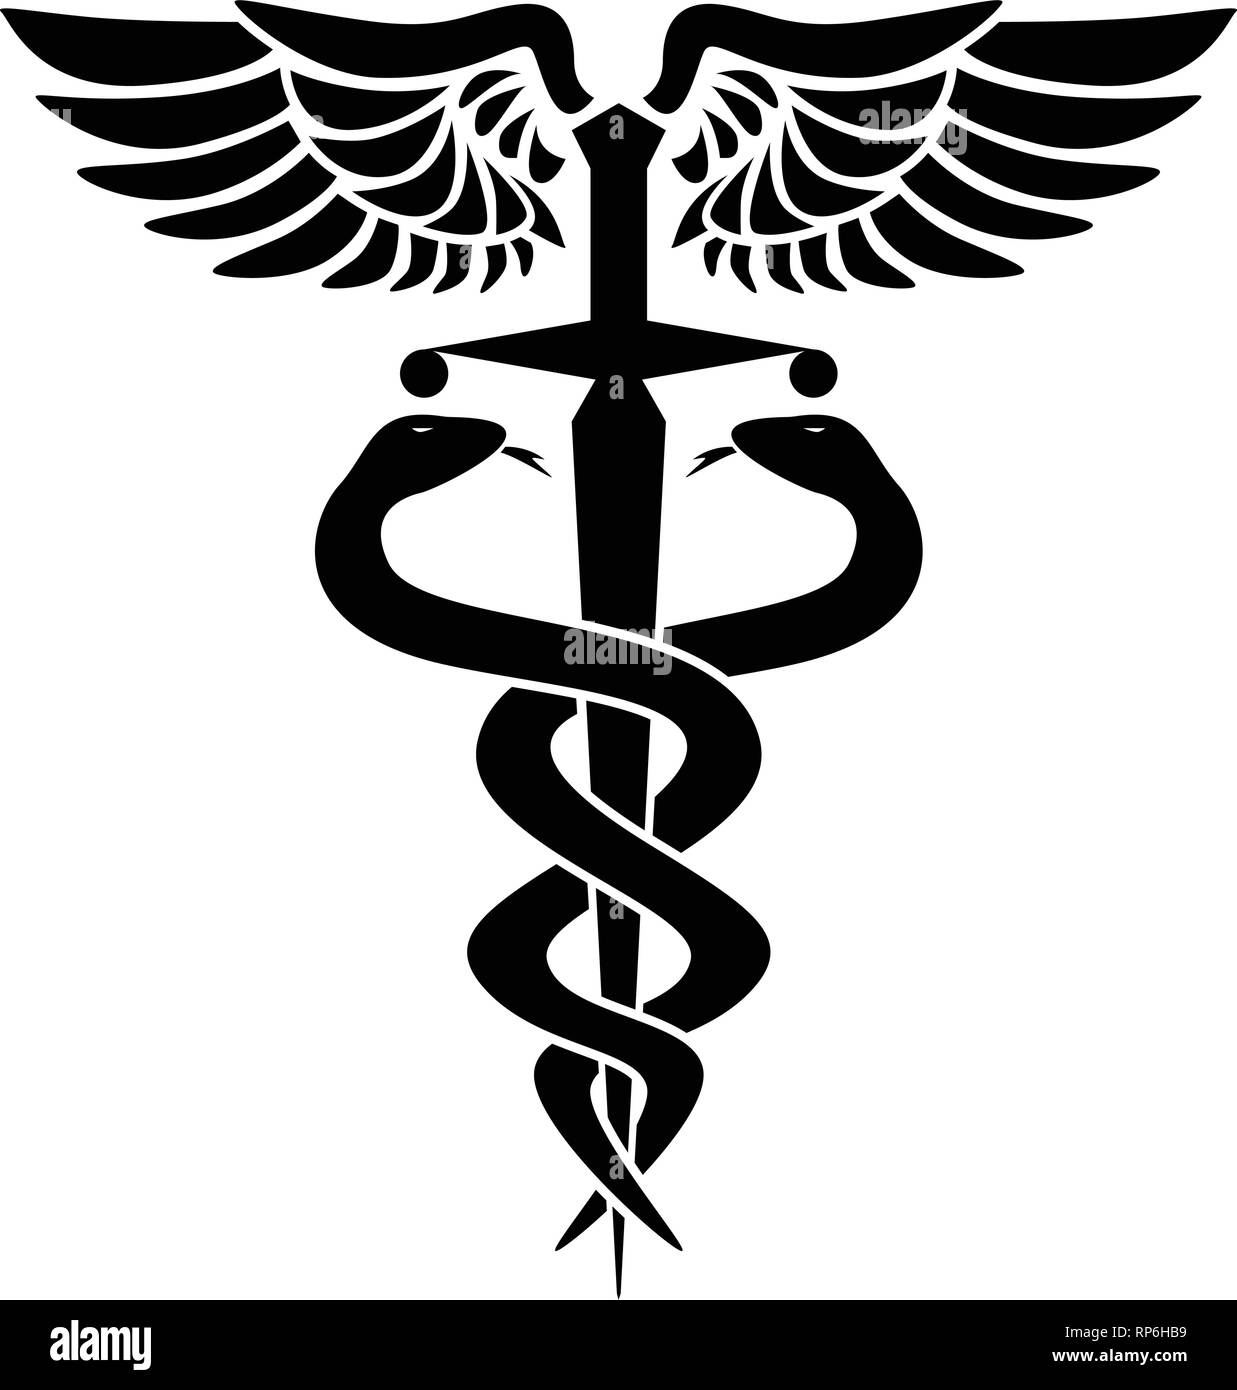 Caduceus medical symbol Stock Vector